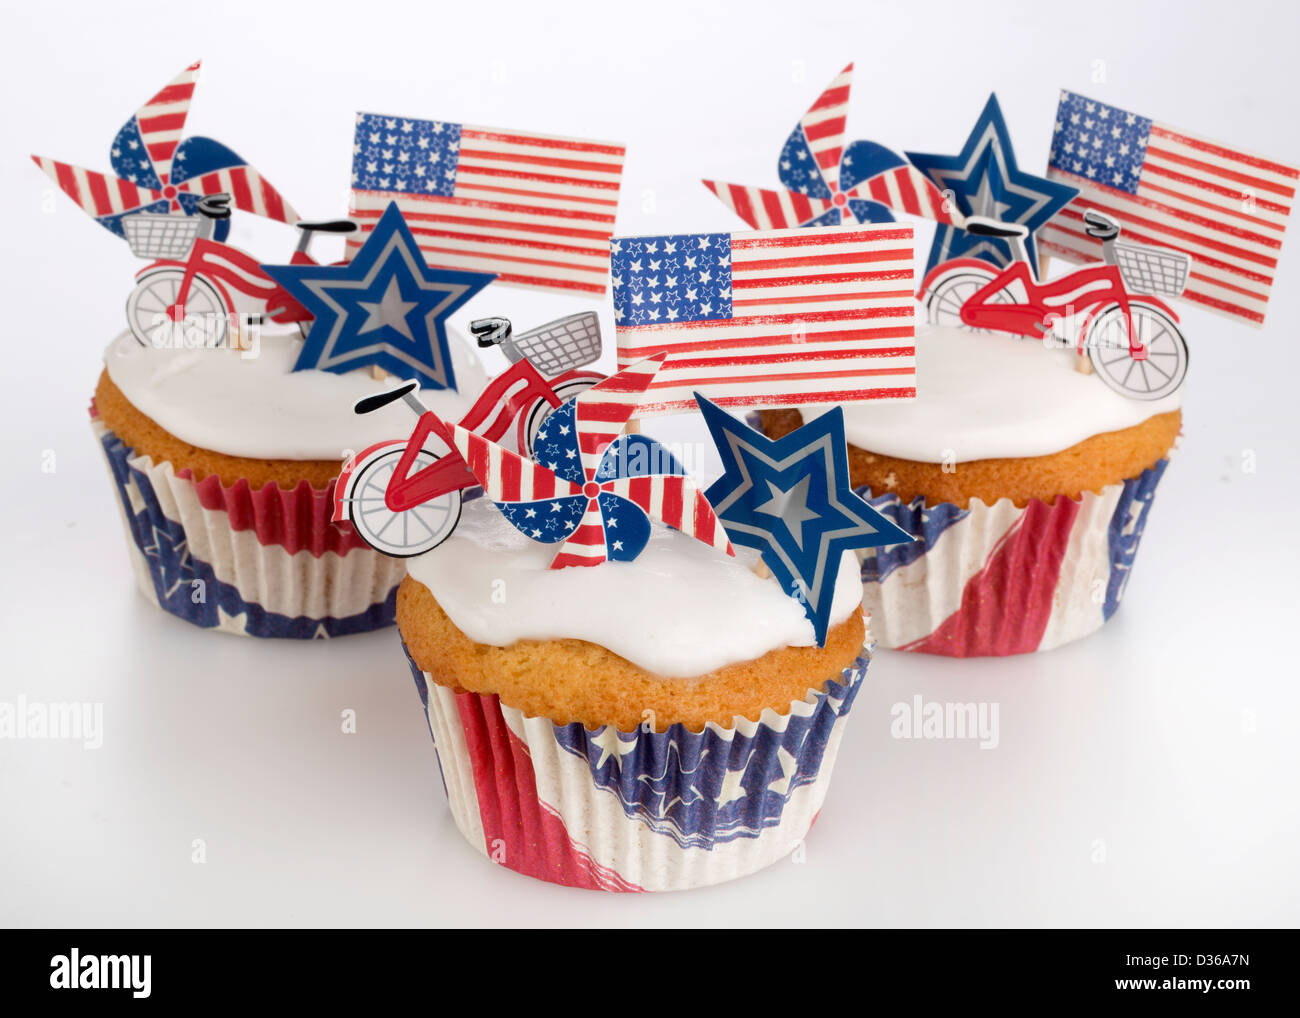 Cupcakes americanos fotografías e imágenes de alta resolución - Alamy